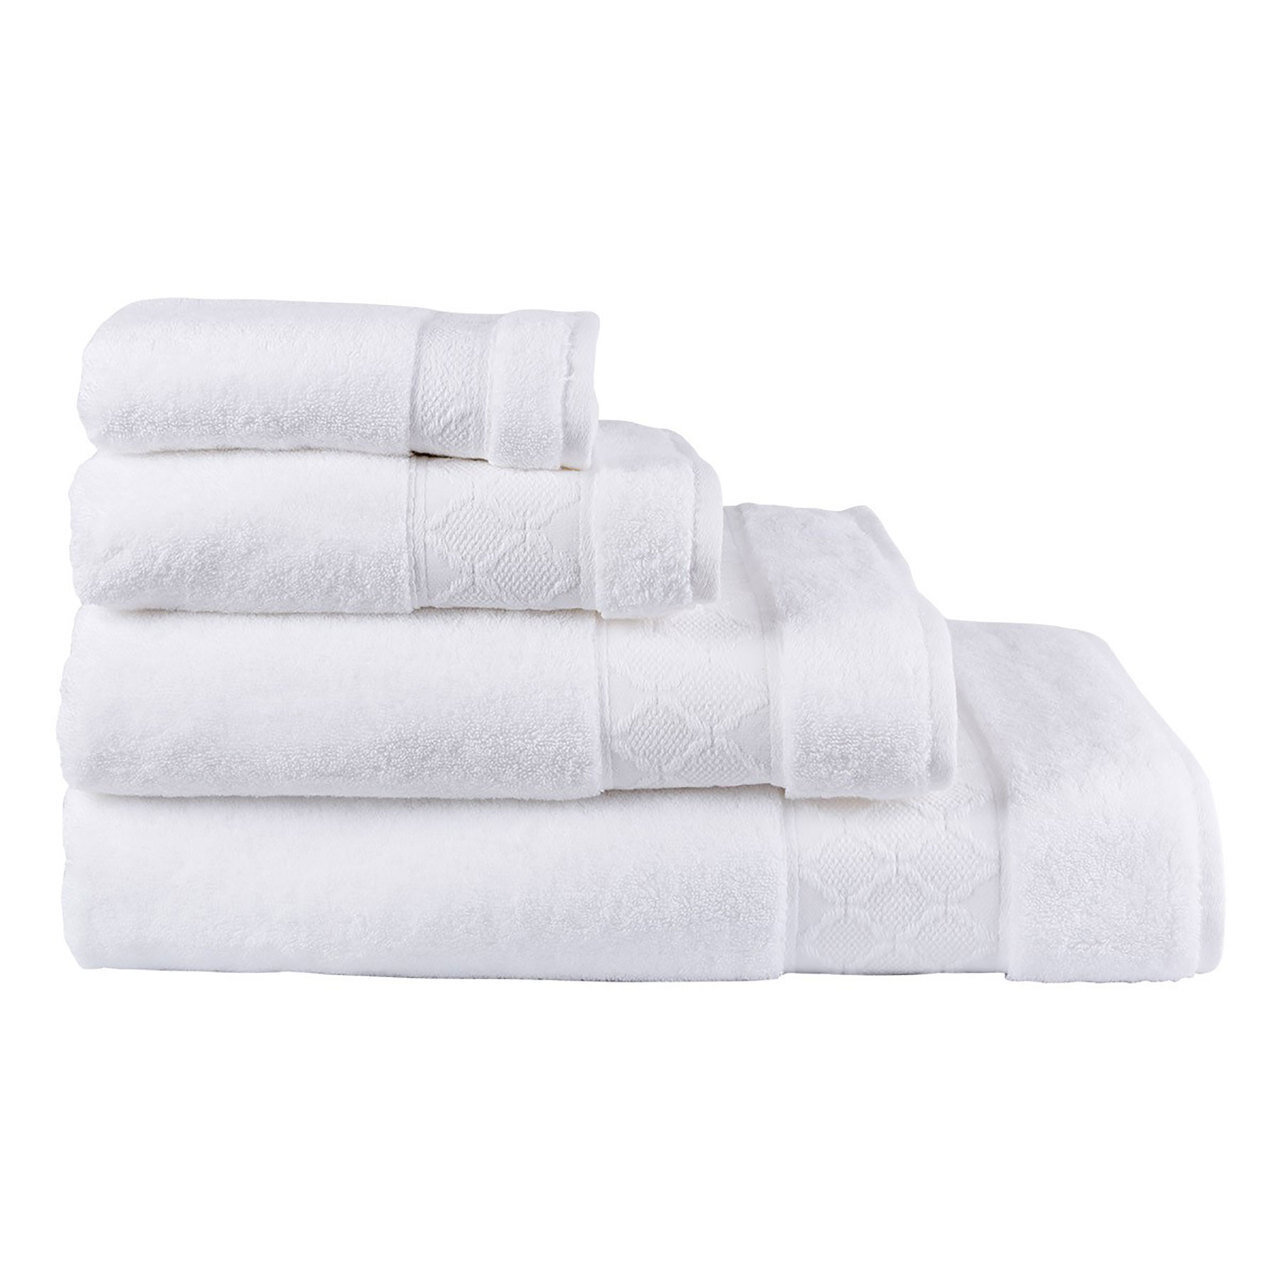 Le Jacquard Caresse White Bath Towel 27x55